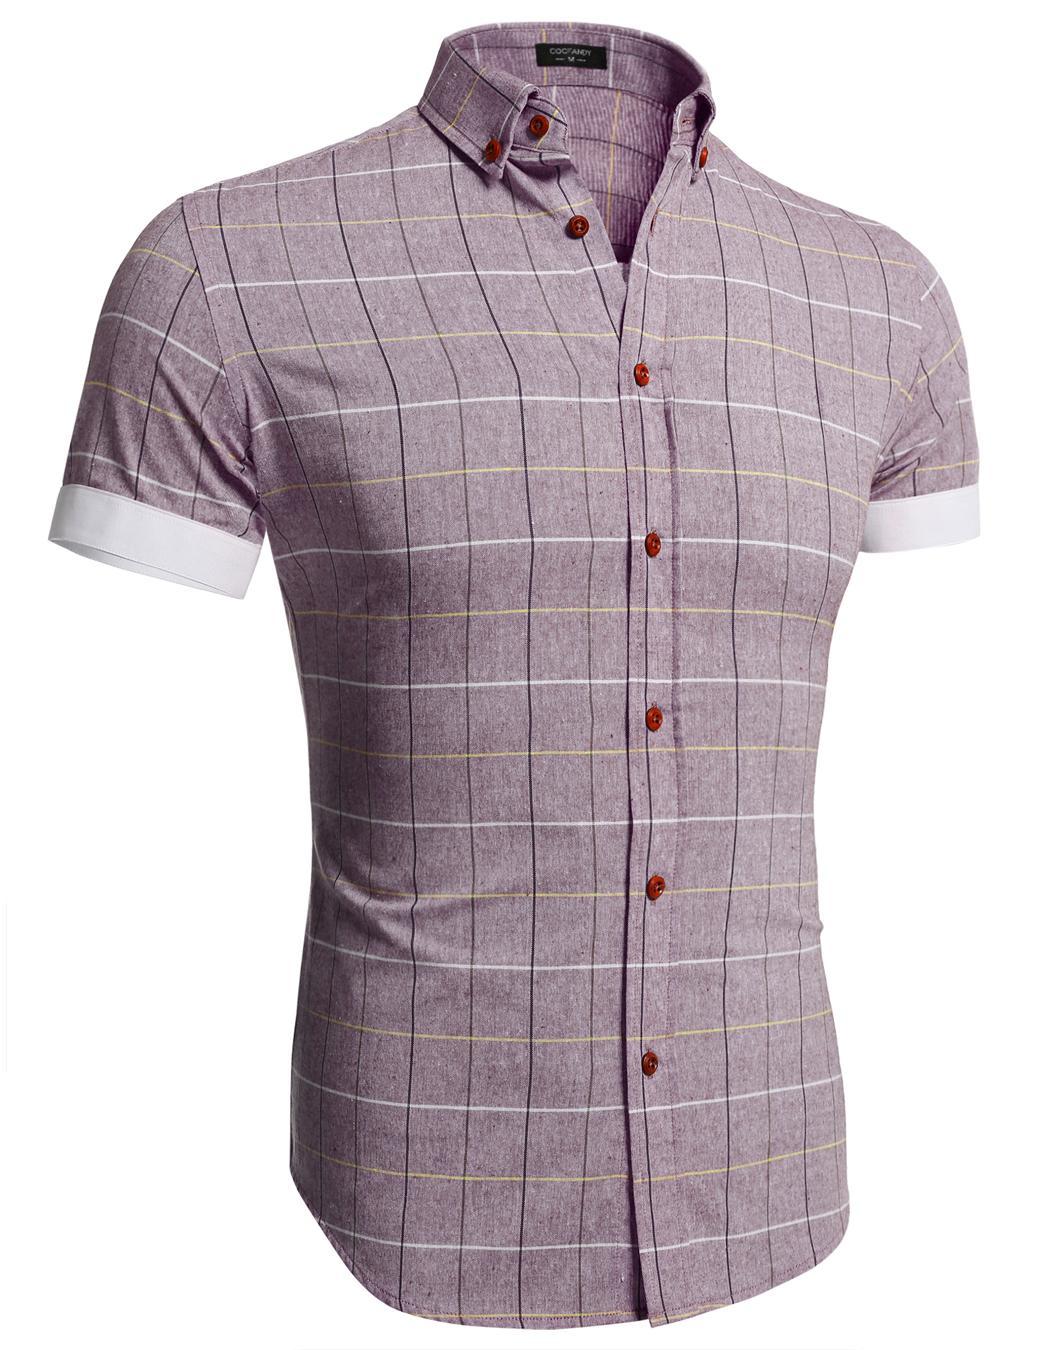 Men COOFANDY Dress shirts Shirts Tops Casual Short Sleeve Button Down ...